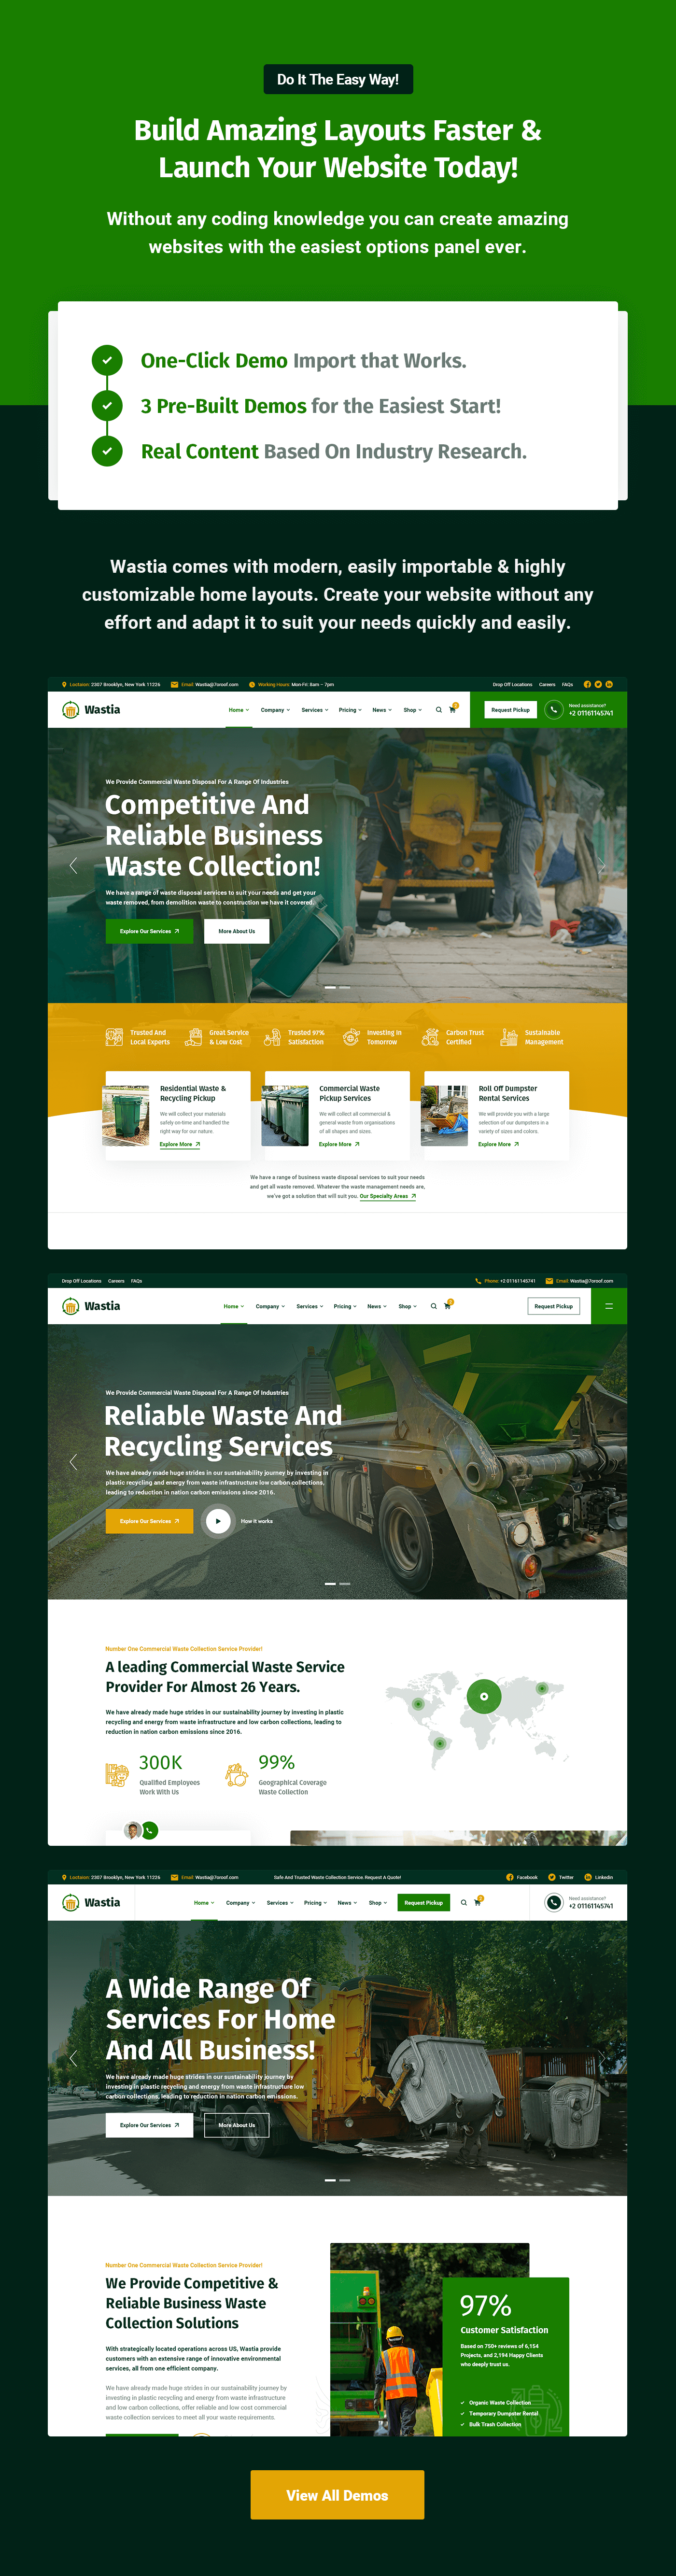 Wastia - Waste Pickup And Disposal Services WordPress Theme - 5